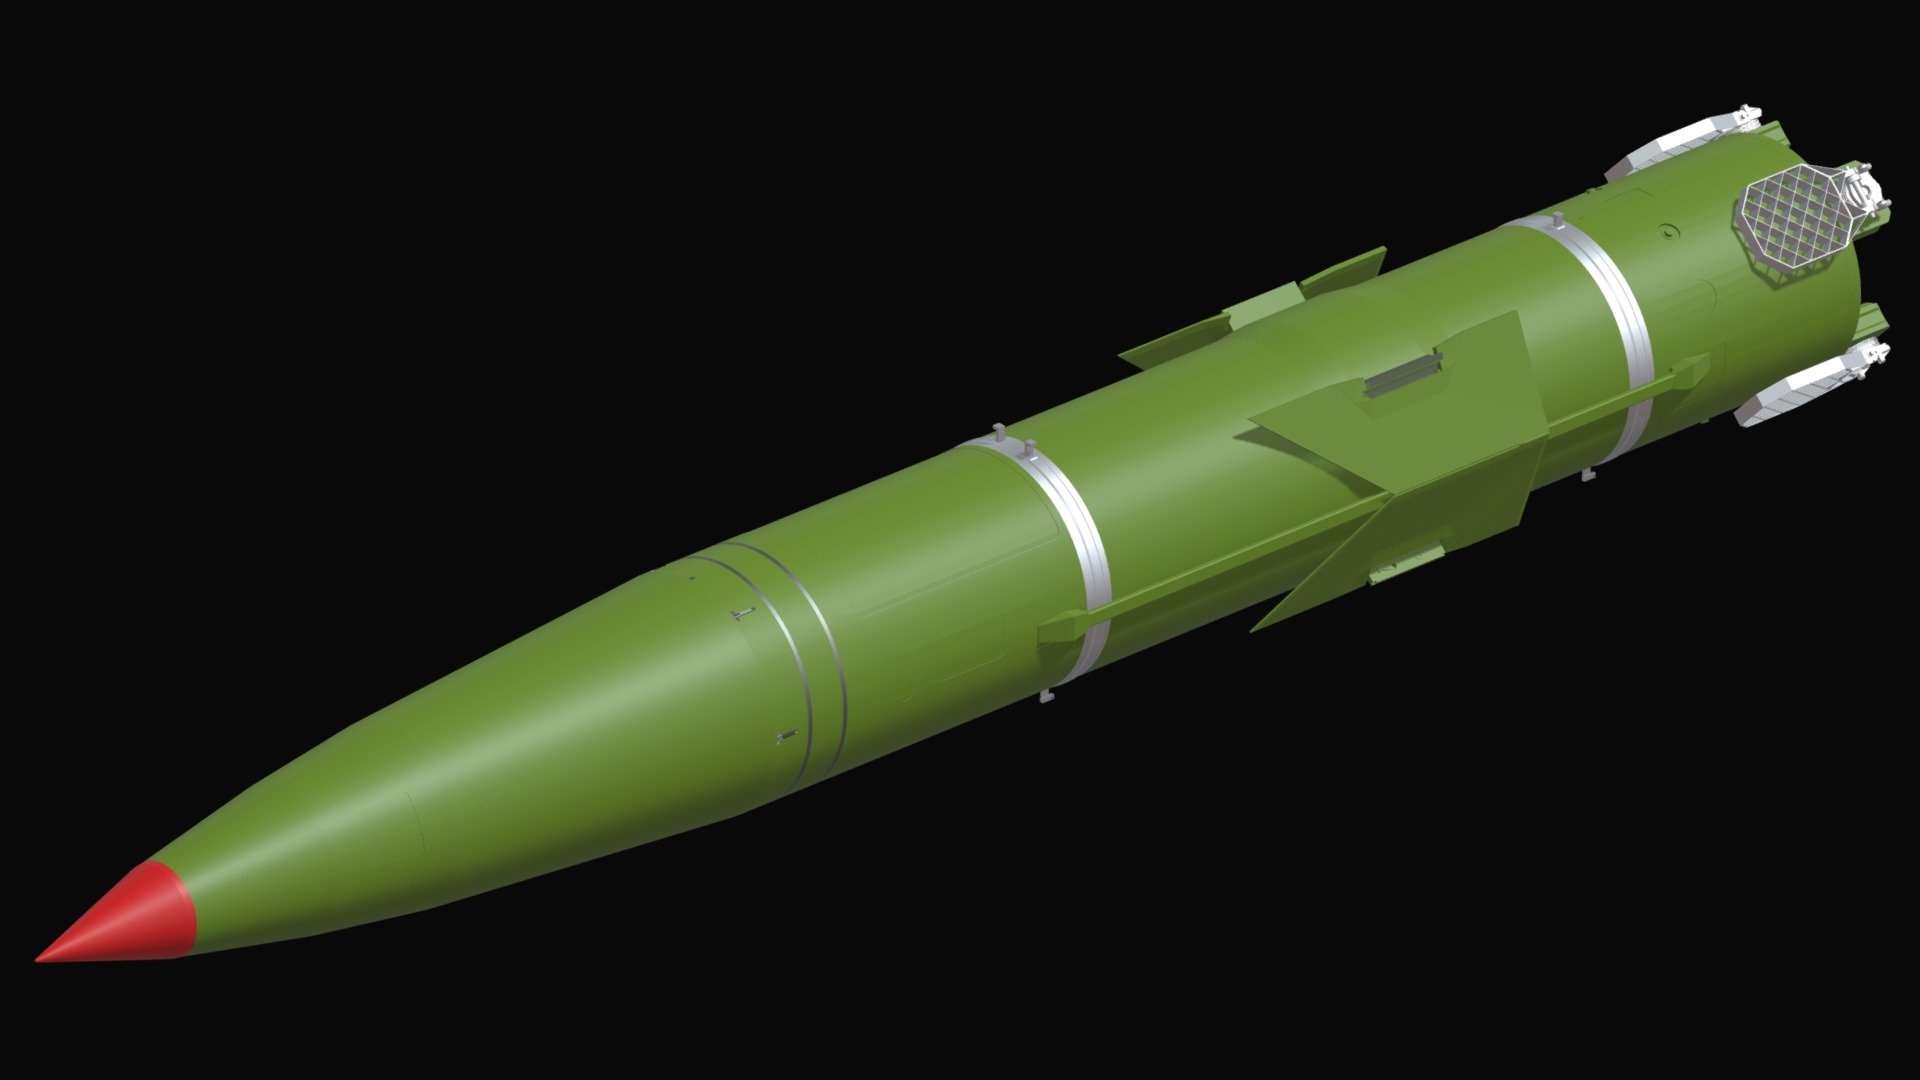 9M79K Tochka-U tactical ballistic missile (USSR/Russia) 3d model